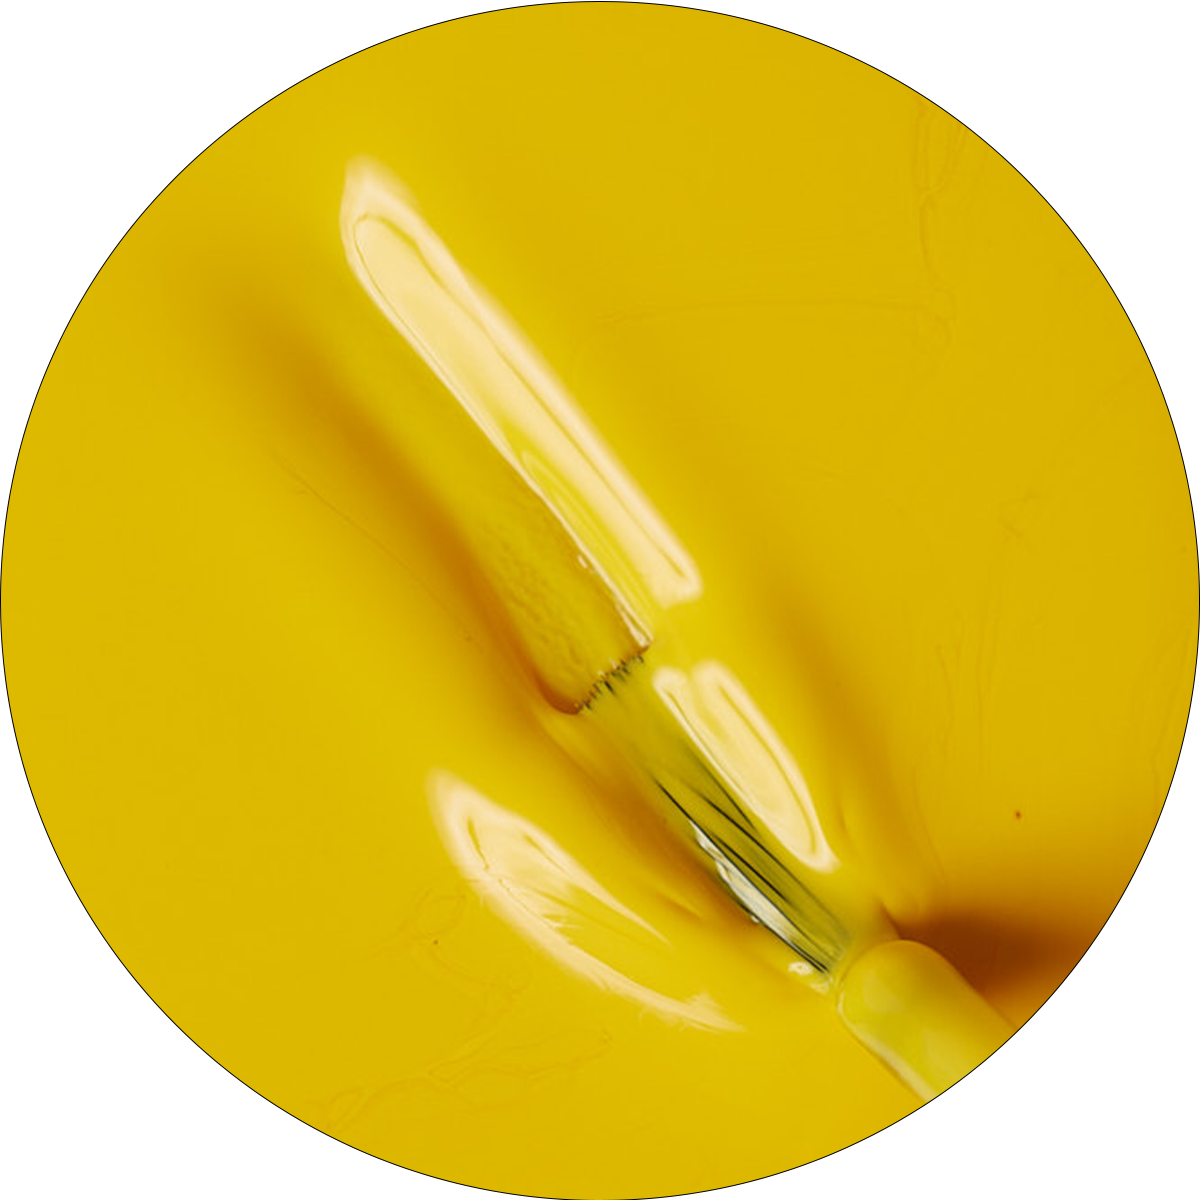 paint swatch of yellow nail polish